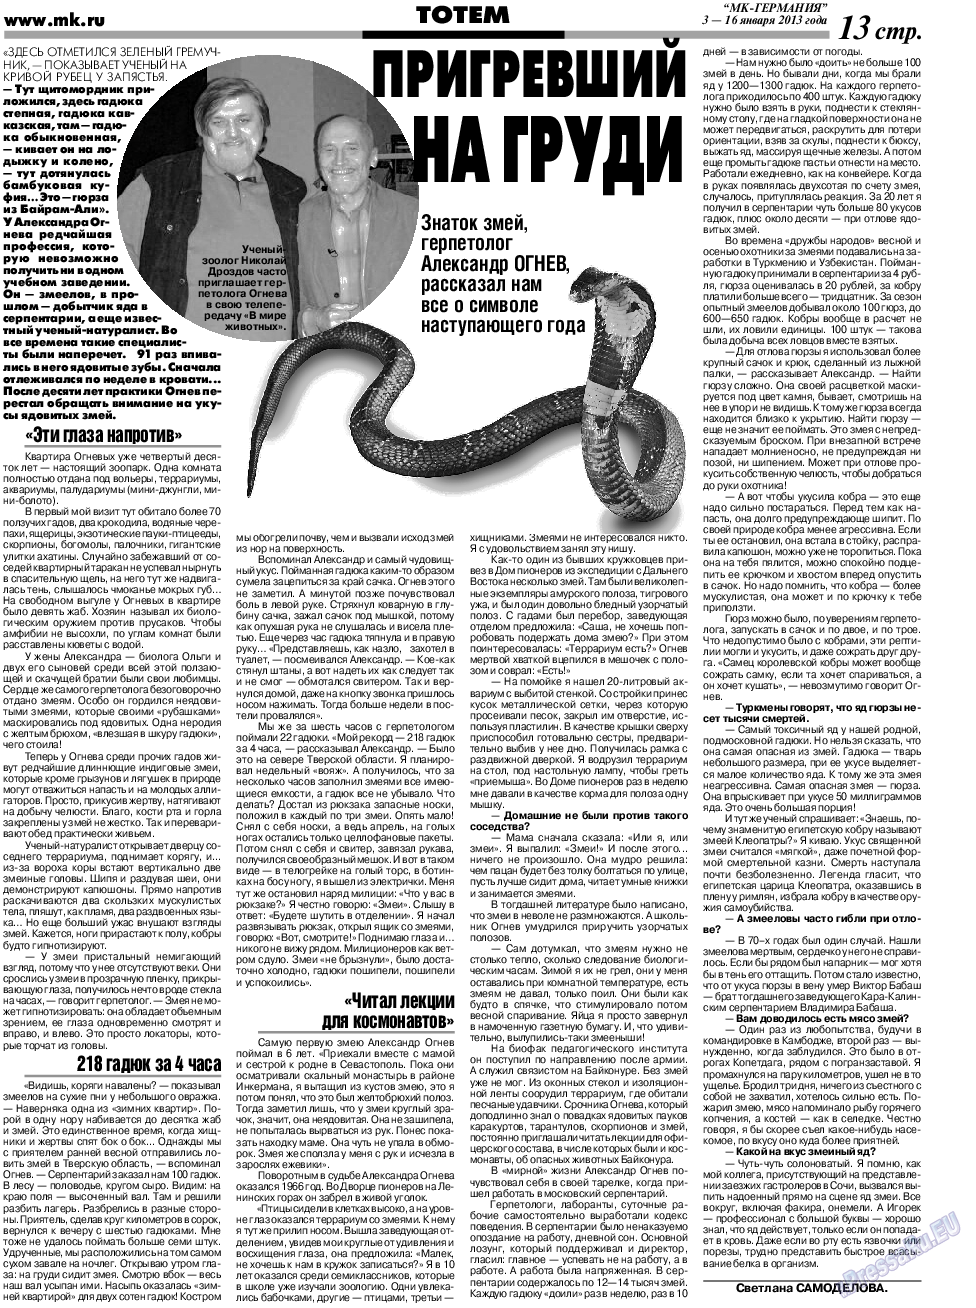 МК-Германия, газета. 2013 №1 стр.13